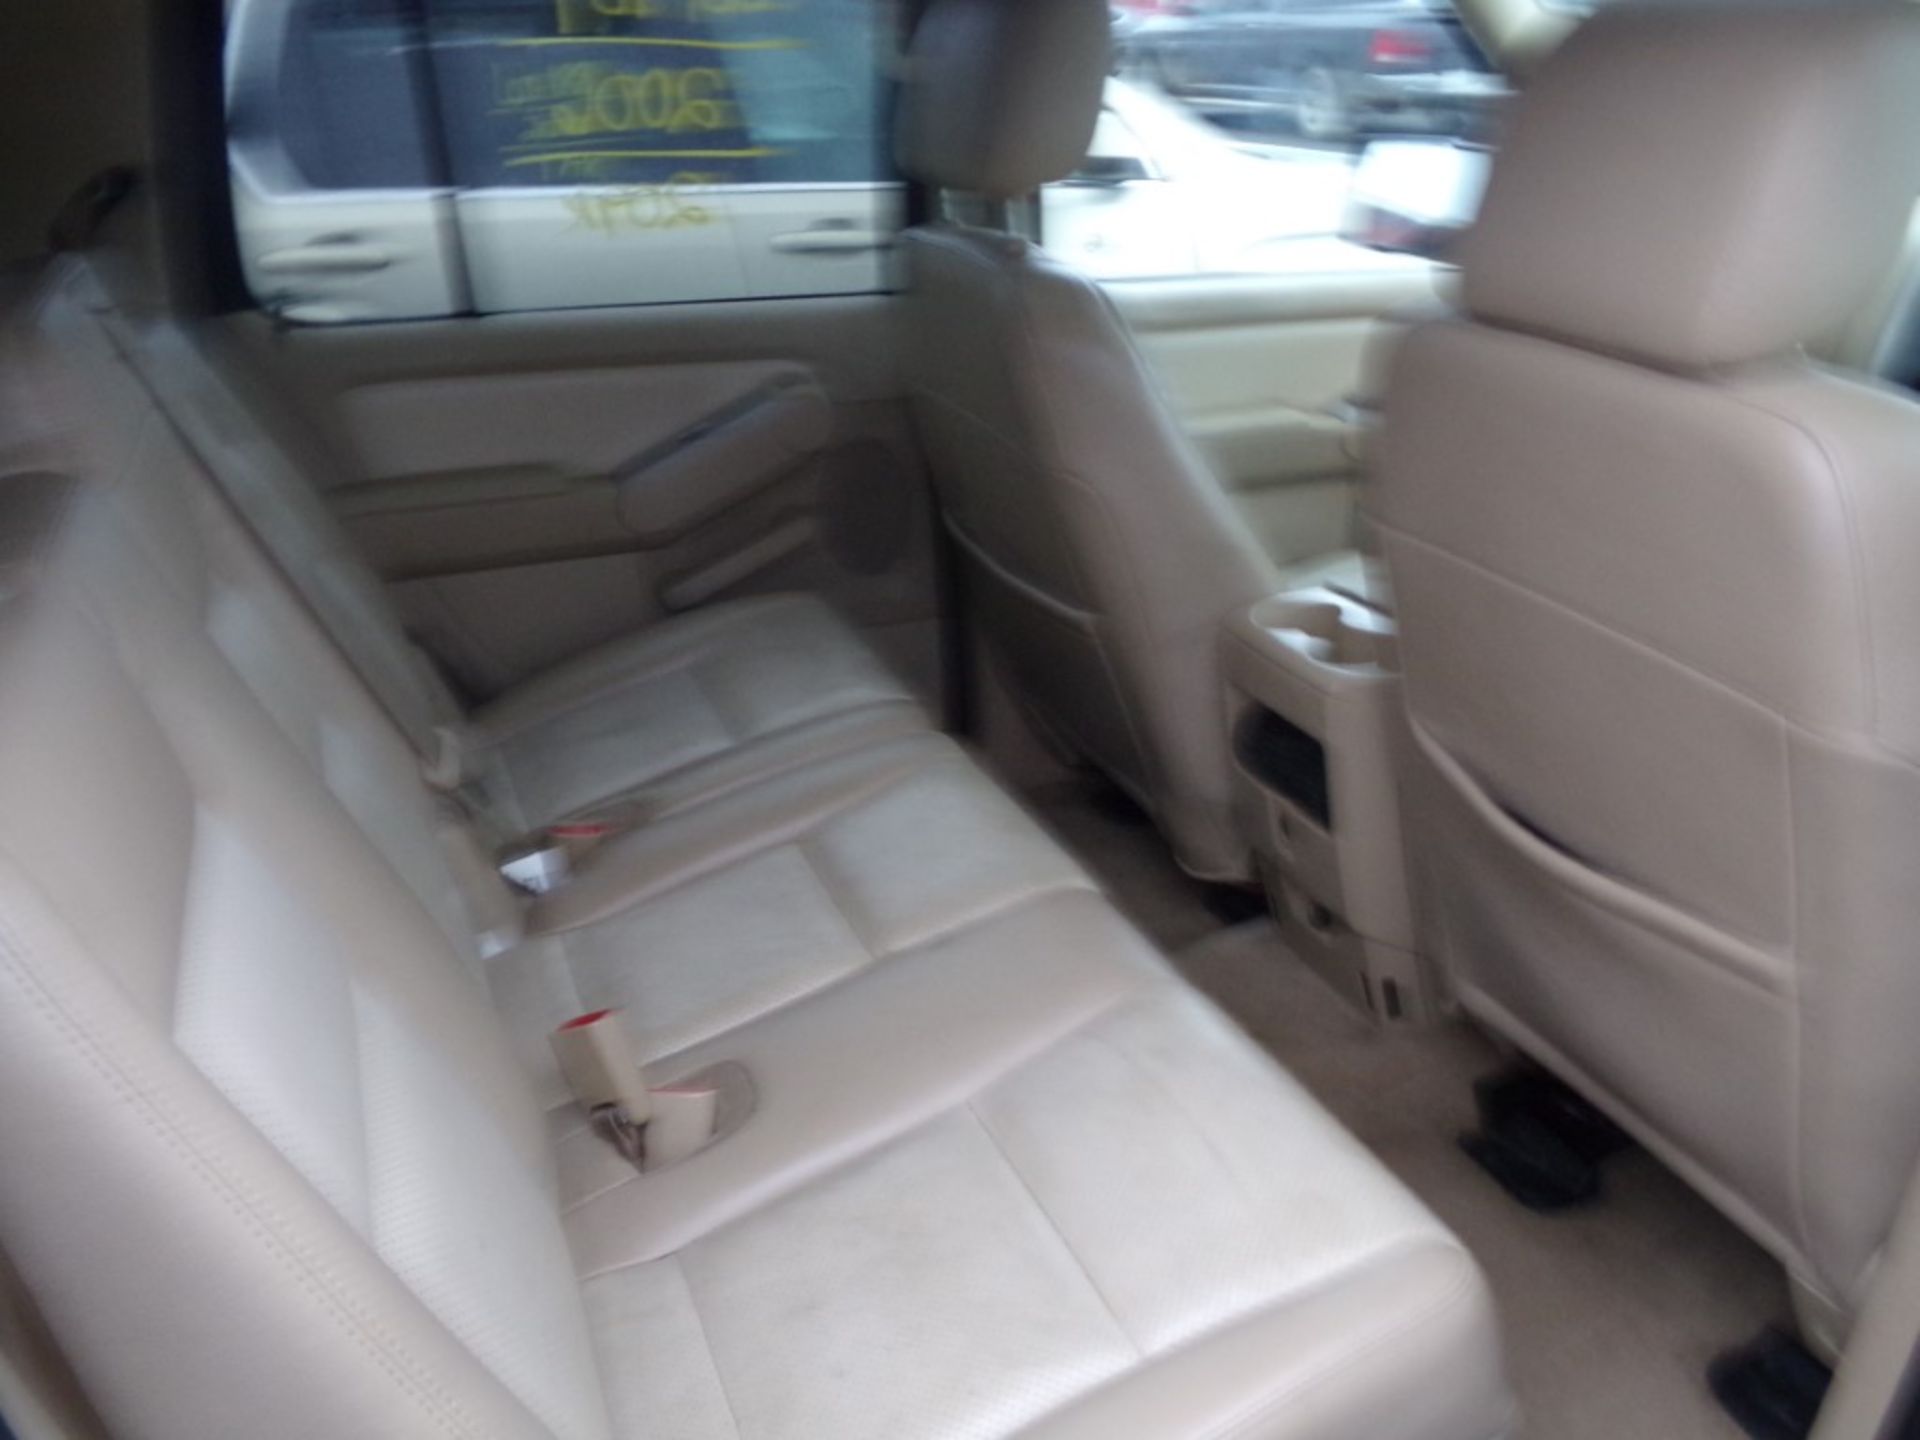 2006 Mercury Mountaineer Luxury, AWD, Leather, Sunroof, 3rd Seat, Gray, 209,473 Mi, Vin# - Image 4 of 6